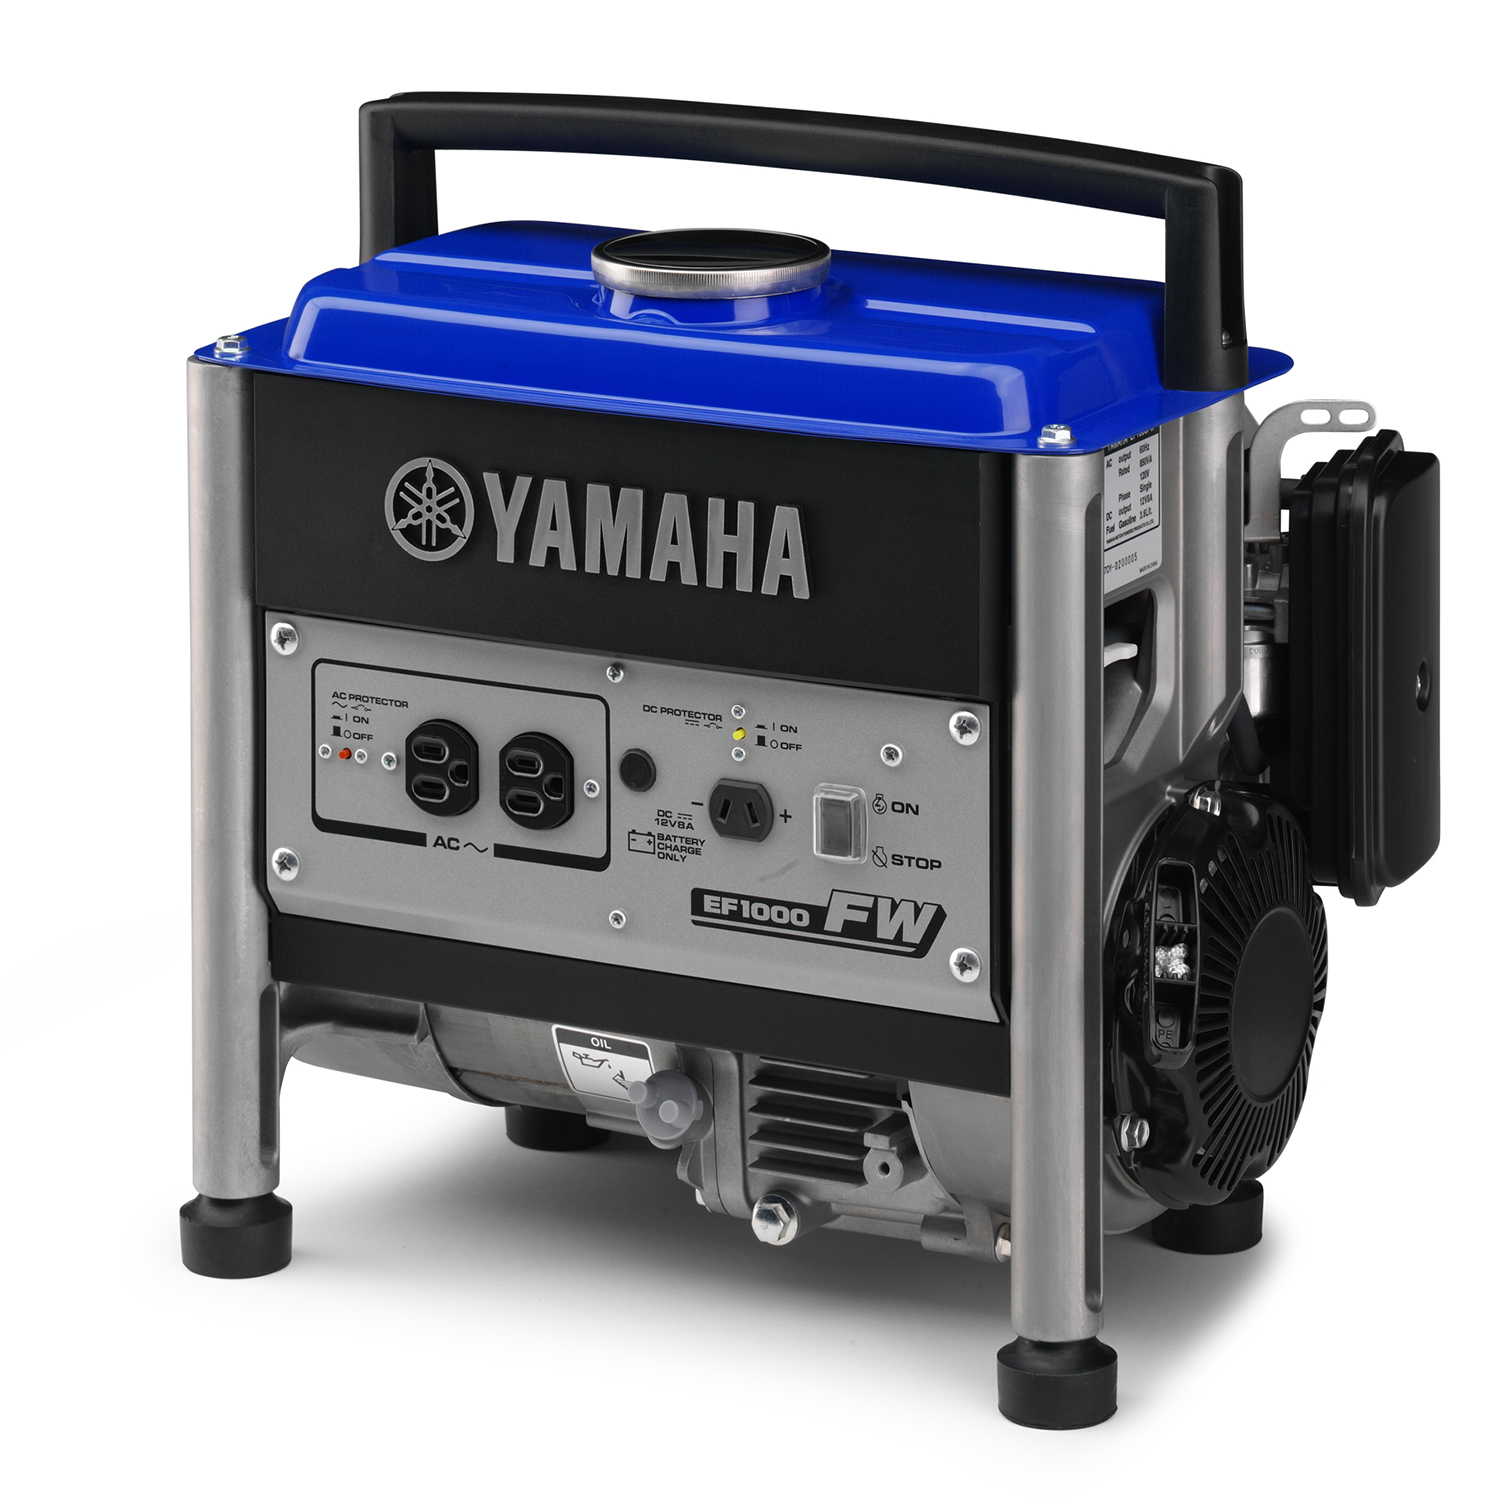 Купить генератор ямаха. Генератор Yamaha ef1000. Генератор бензиновый Ямаха 1.5 КВТ. Бензиновый Генератор Ямаха ef1000. Бензогенератор «Yamaha ef1000».